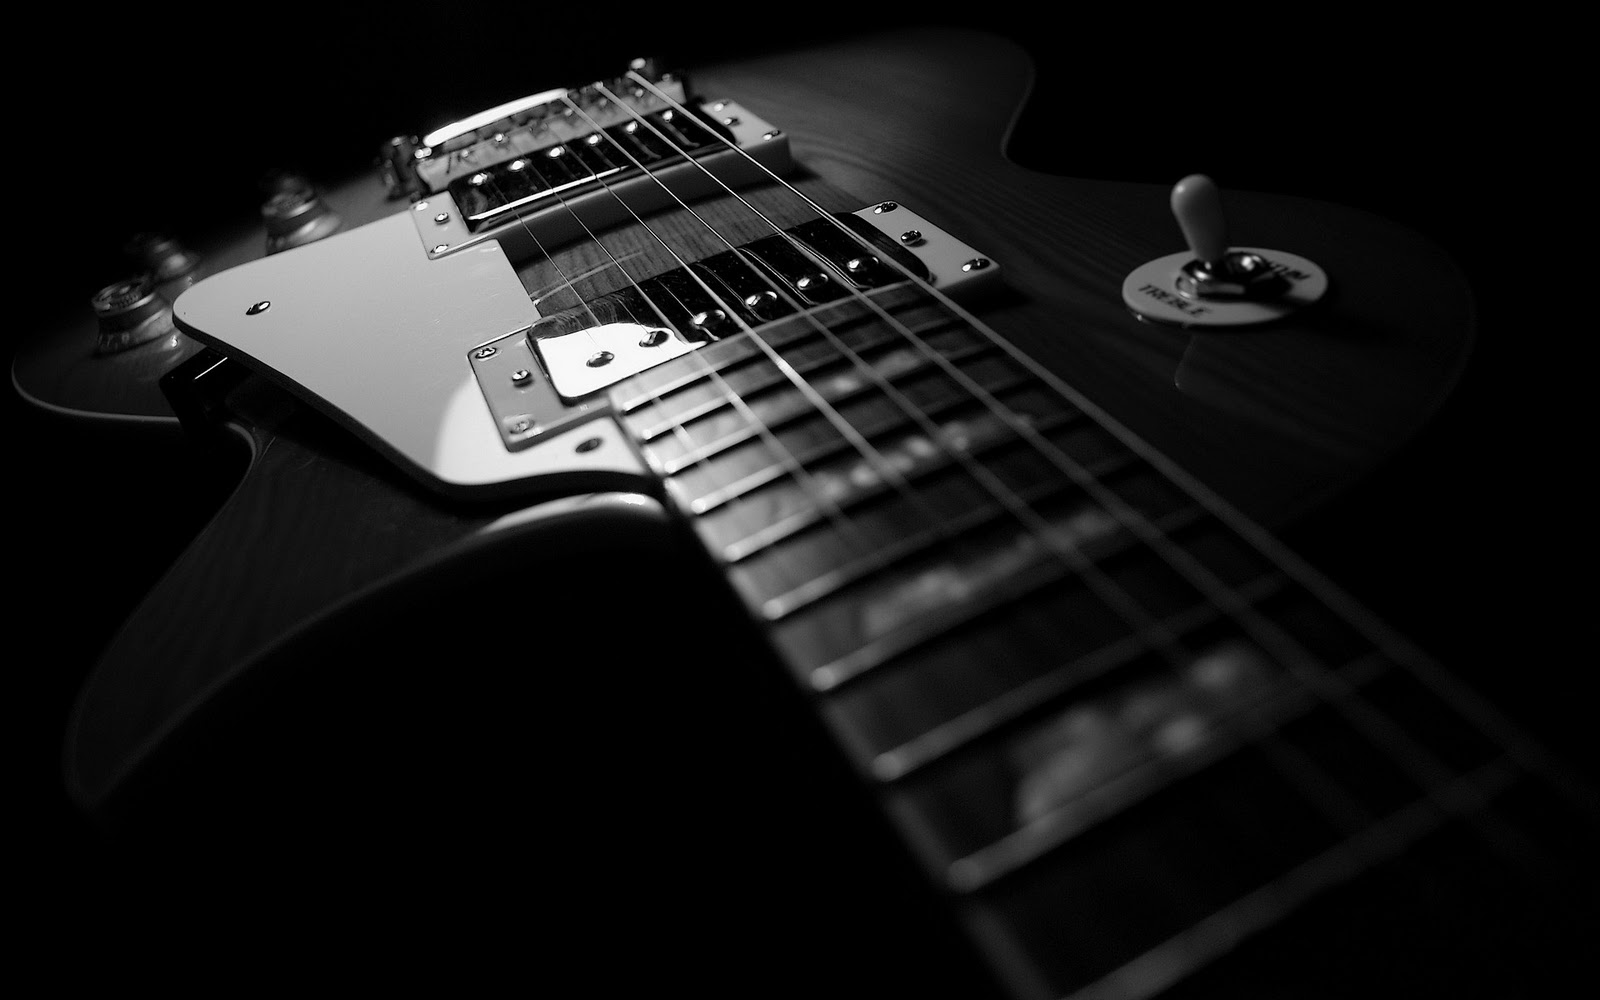 Gibson Guitar Wallpaper For Desktop Image Pictures Becuo